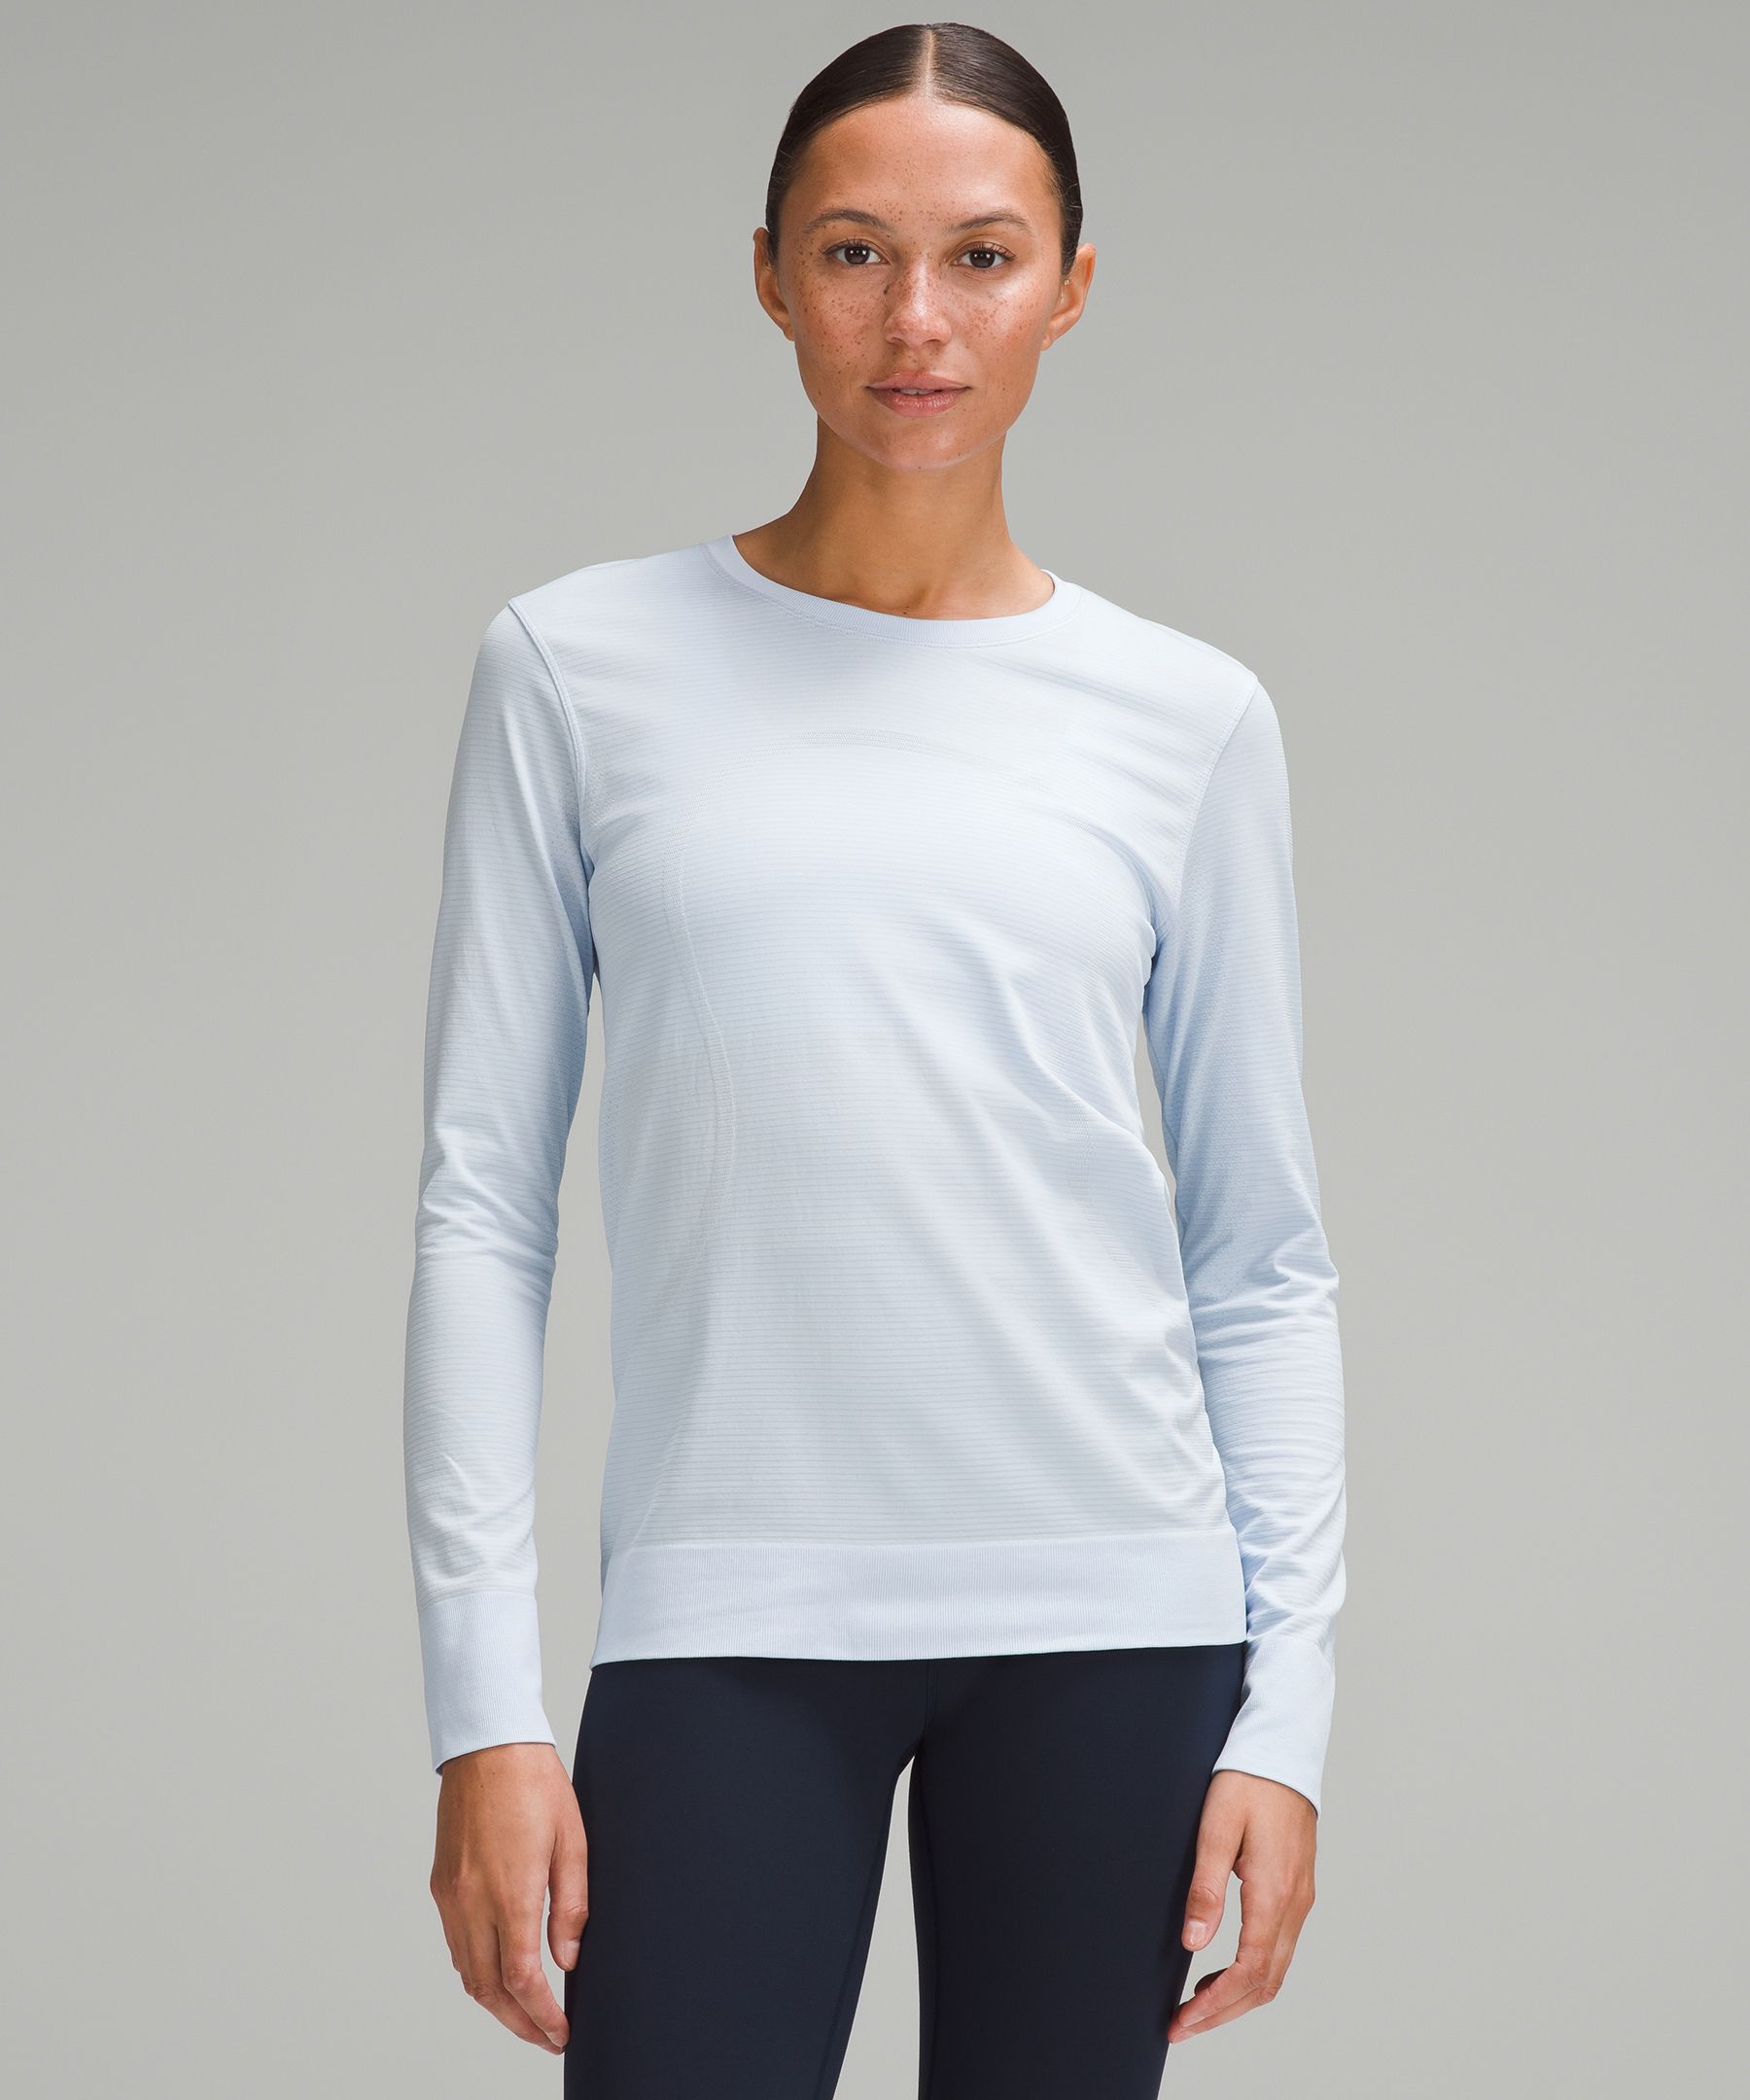 NWT Lululemon Breeze By Long Sleeve Graphite Grey size~4,6~ Train Run  Sweatshirt